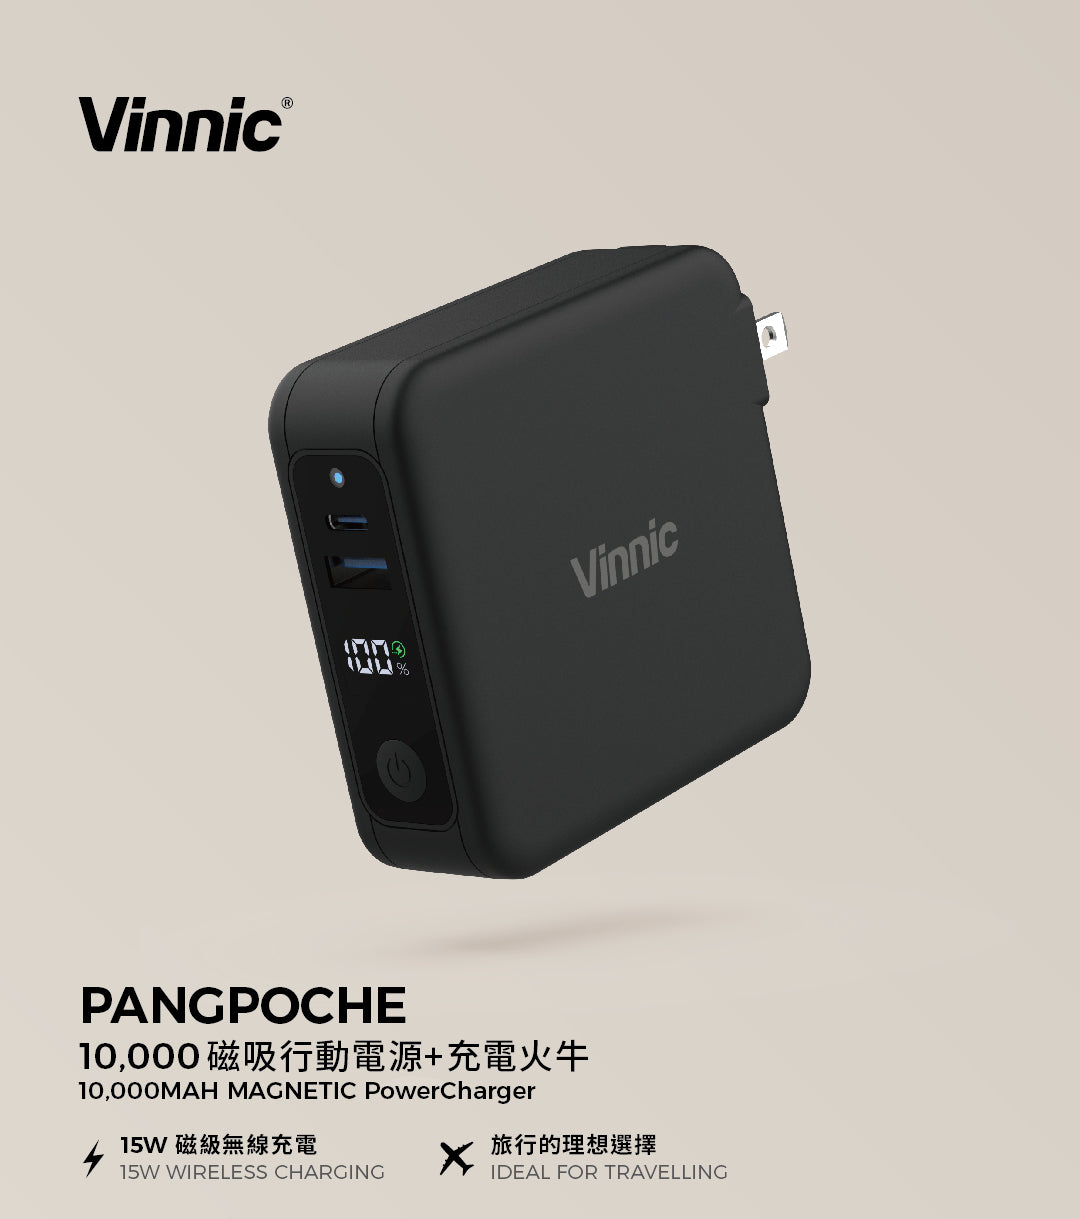 Vinnic Power的Pangpoche 3合1 多功能10,000mAh磁吸充電器，這款創新的充電器不僅提供磁性對齊、快速無線充電和作便攜式行動電源，還可用作旅行轉換插。隨時隨地為您的三部裝置同時充電，盡享一體化充電解決方案。